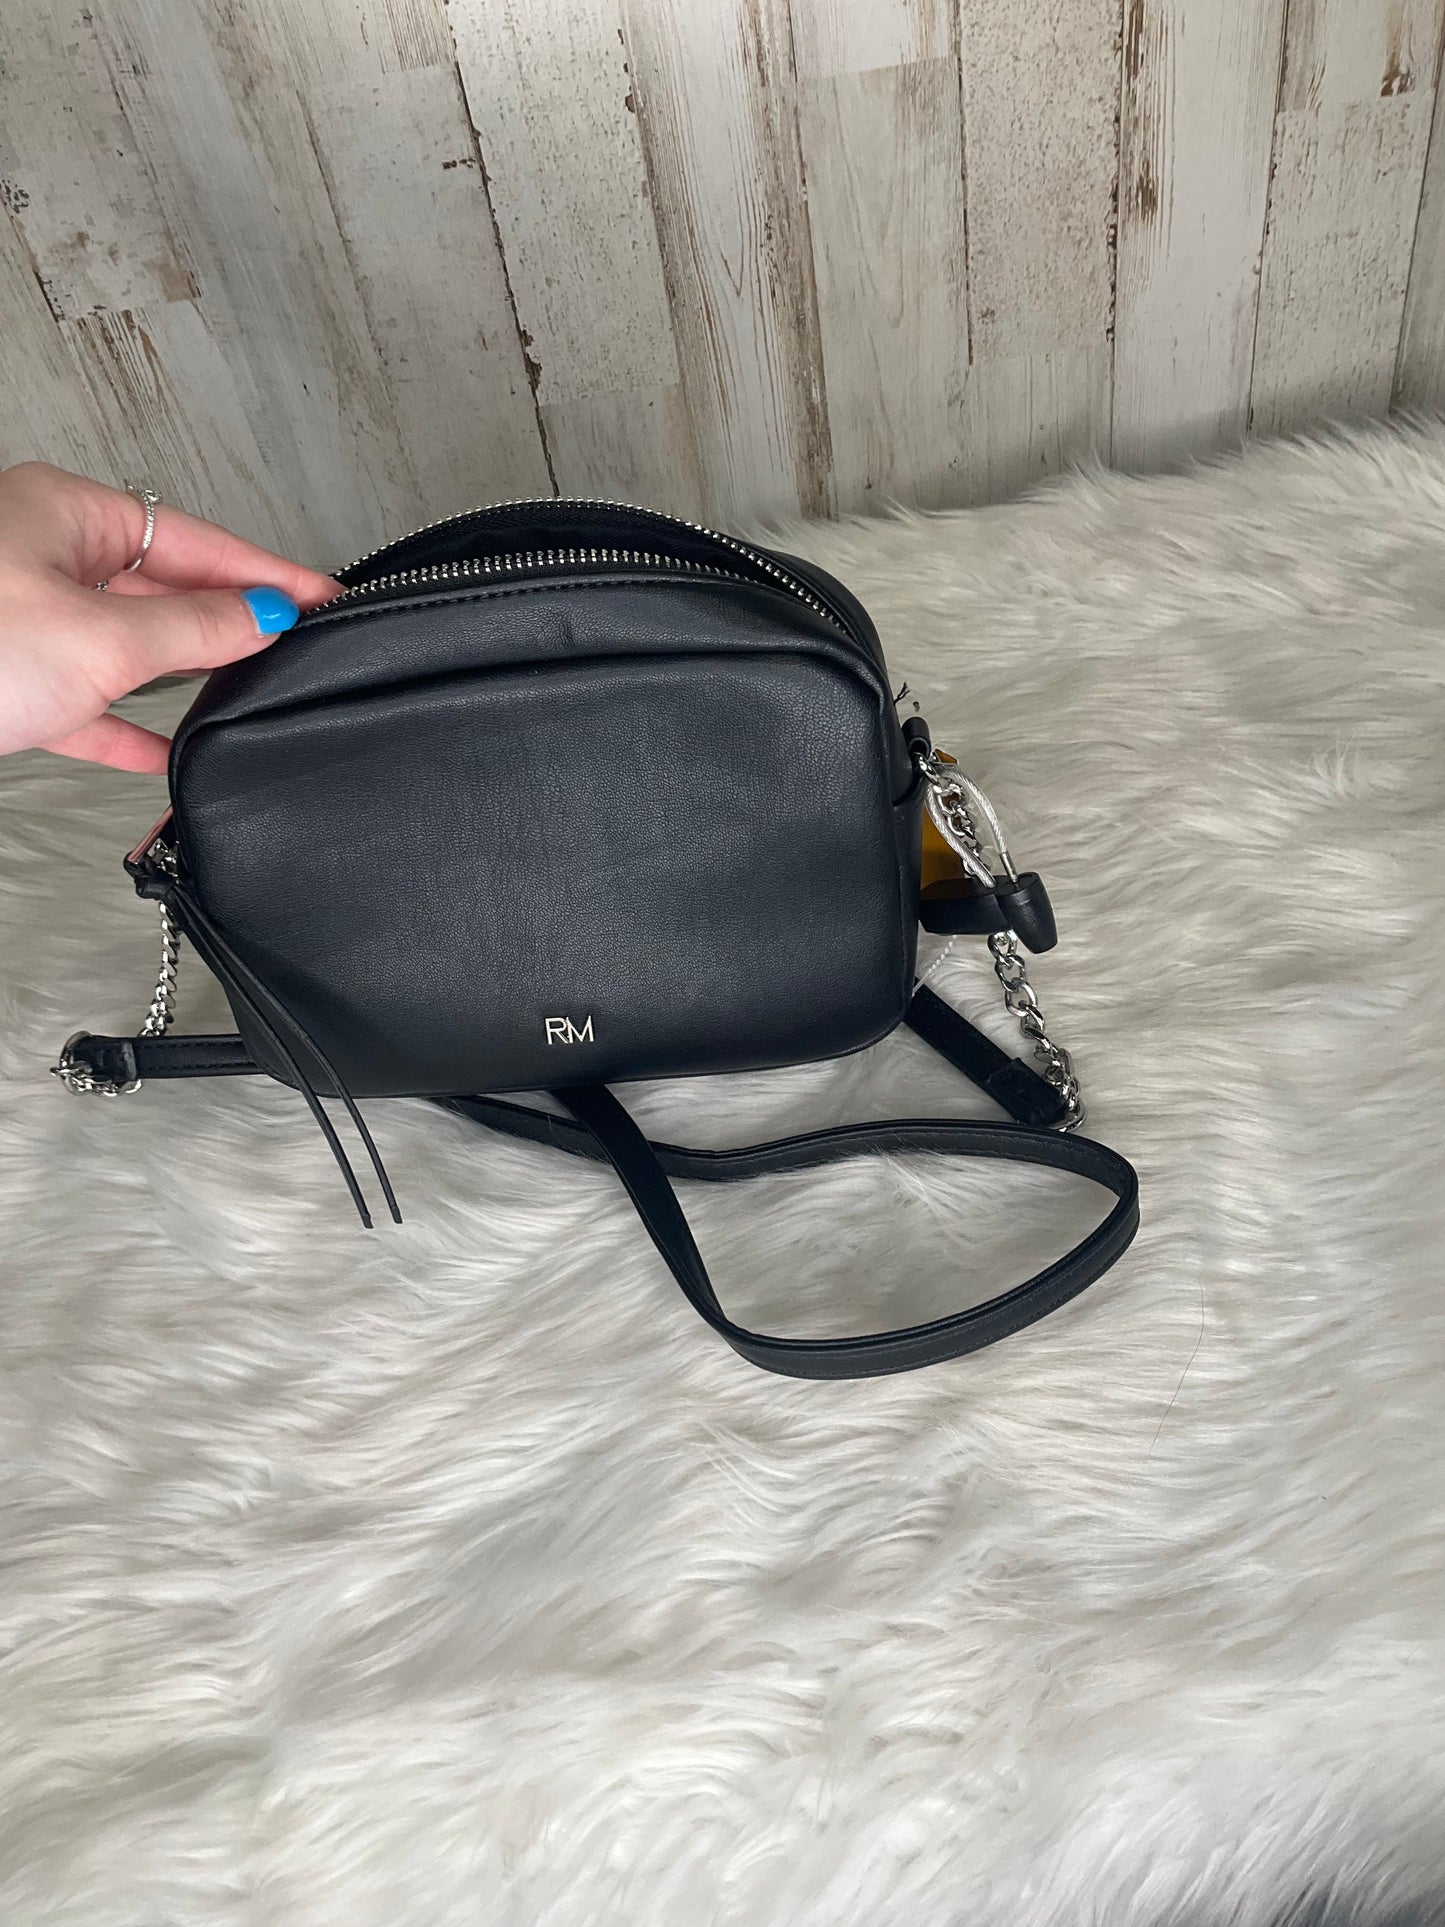 Handbag By Rebecca Minkoff  Size: Small